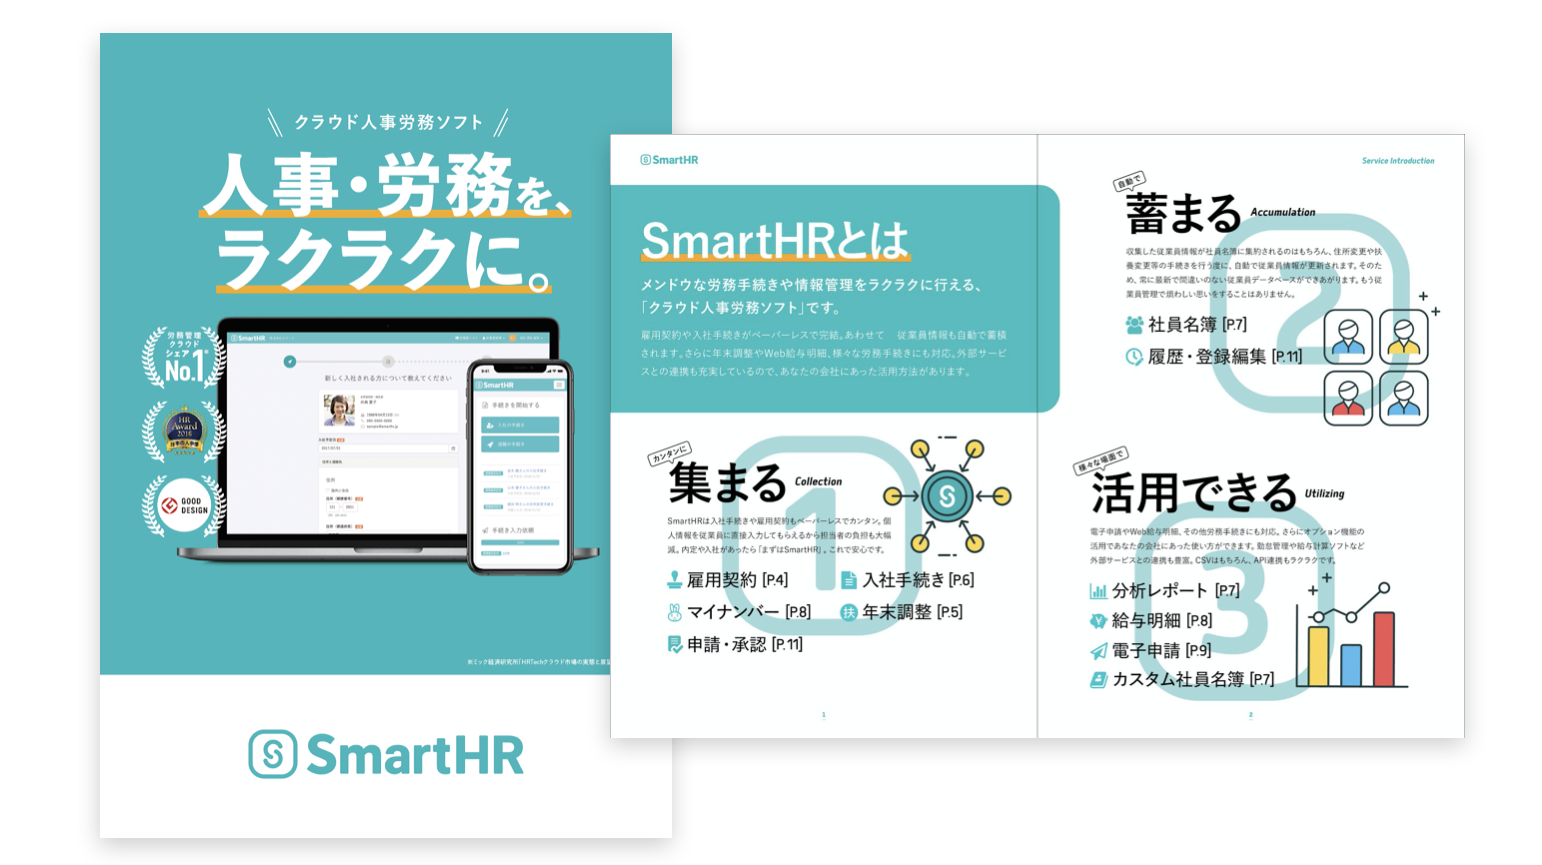 SmartHRのサービス紹介冊子の画像。左手に表紙が、右手に見開きが載っている。